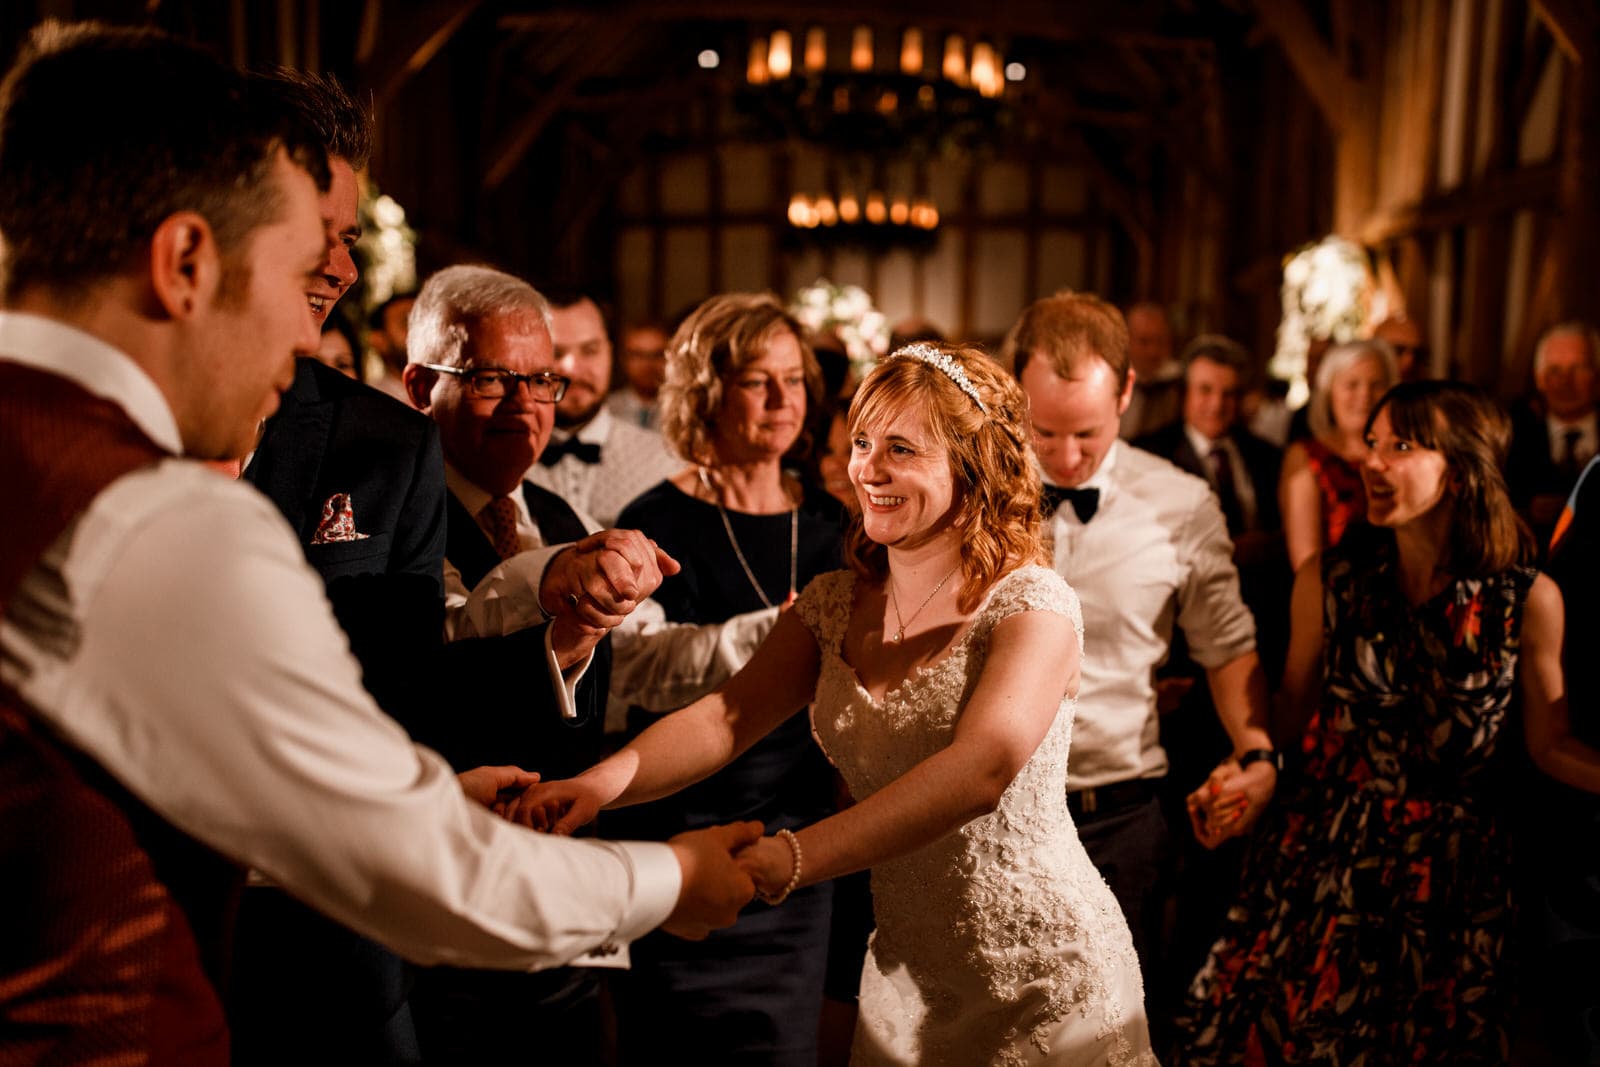 Ceilidh dancing at wedding